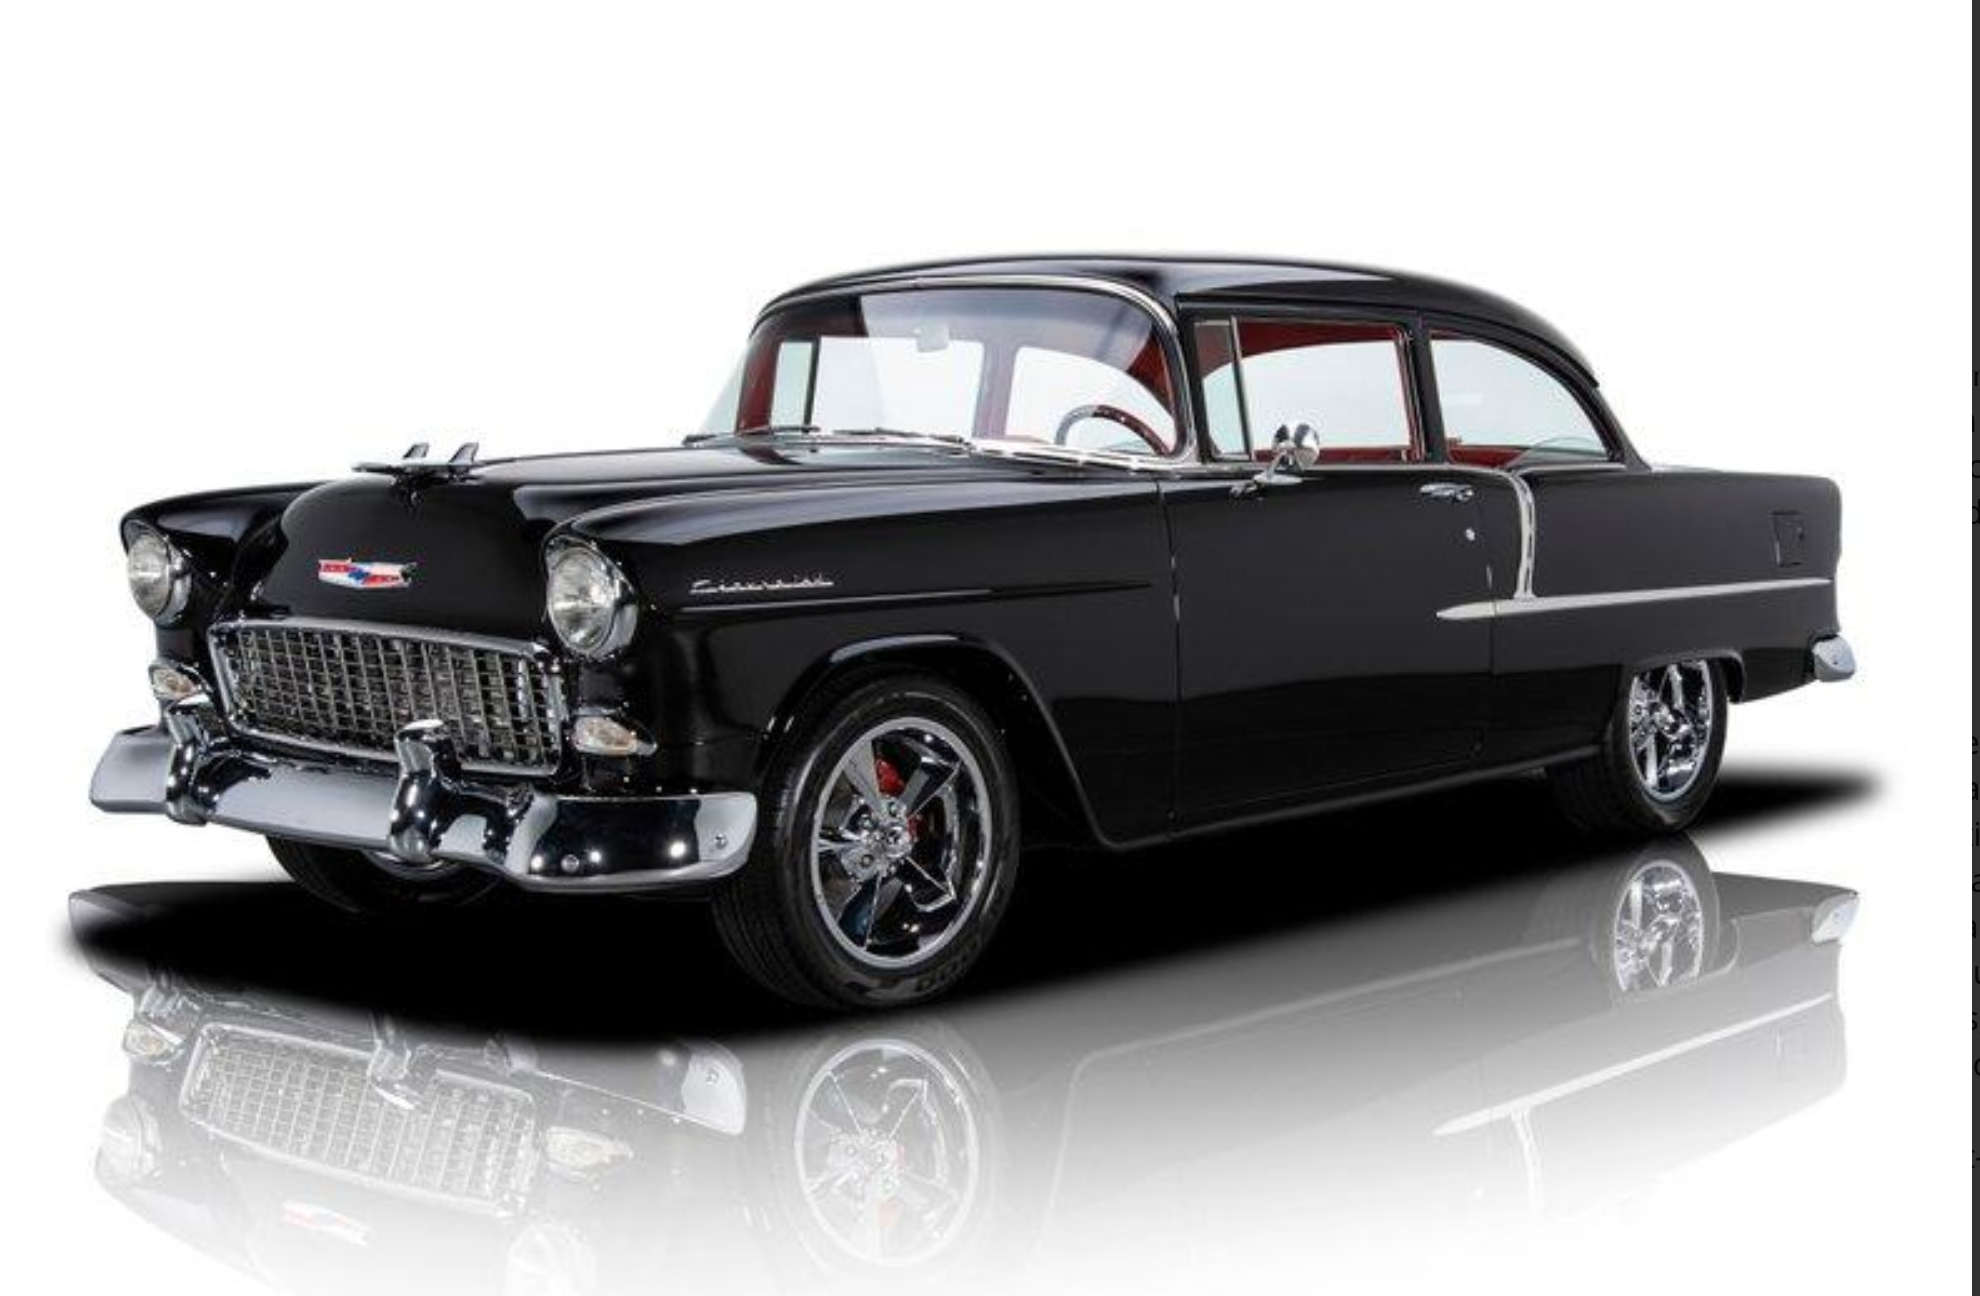 <img src="1955-chevy-210.jpg" alt="A stunning 1955 Chevrolet 210 restomod up for bids">